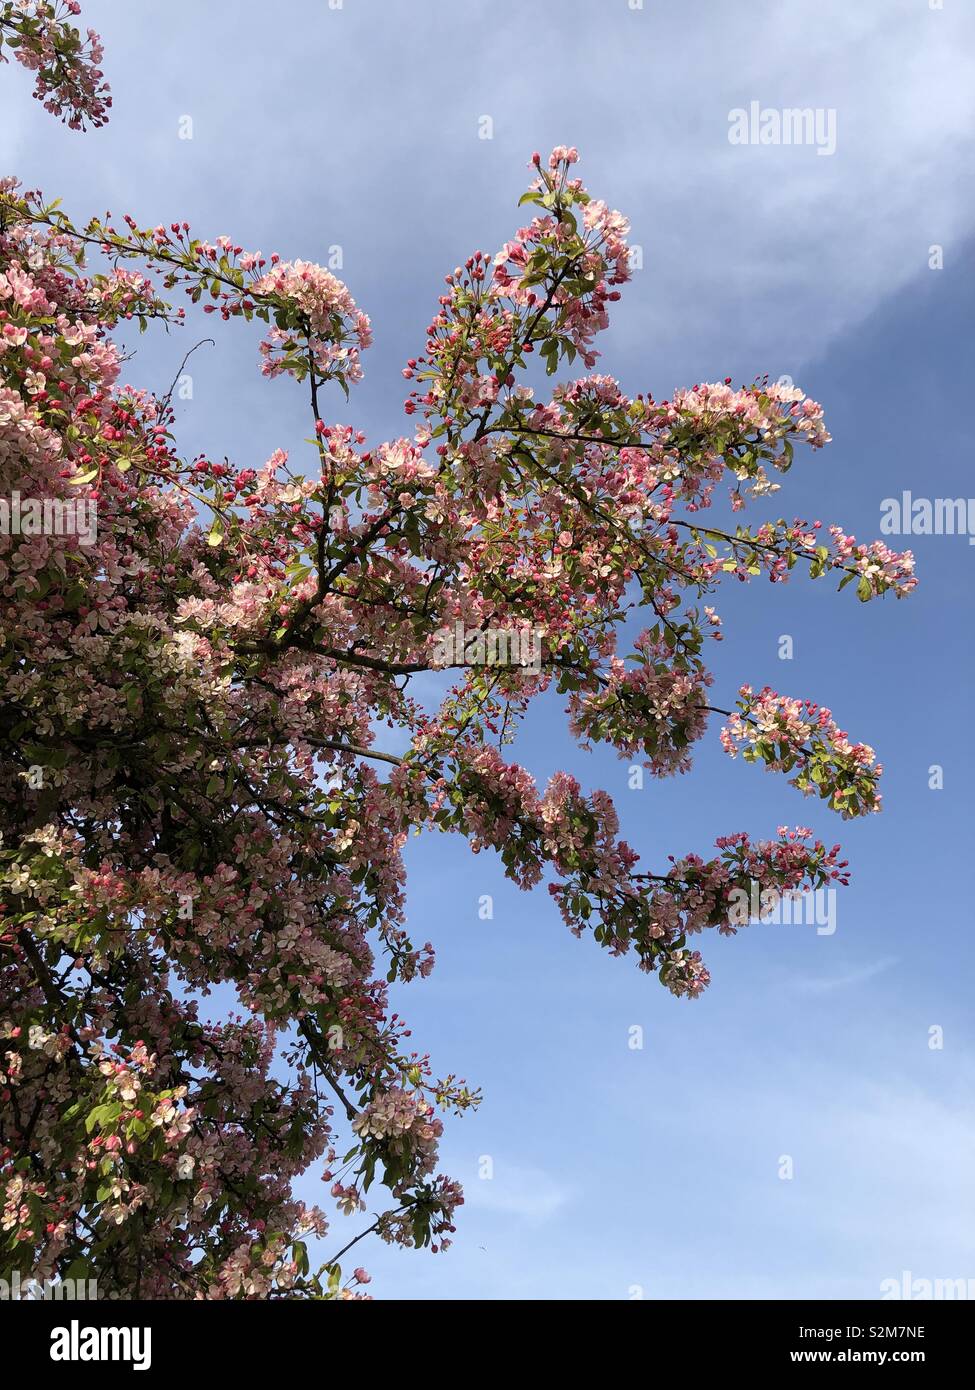 Apple blossom against a blue sky in Springtime Stock Photo